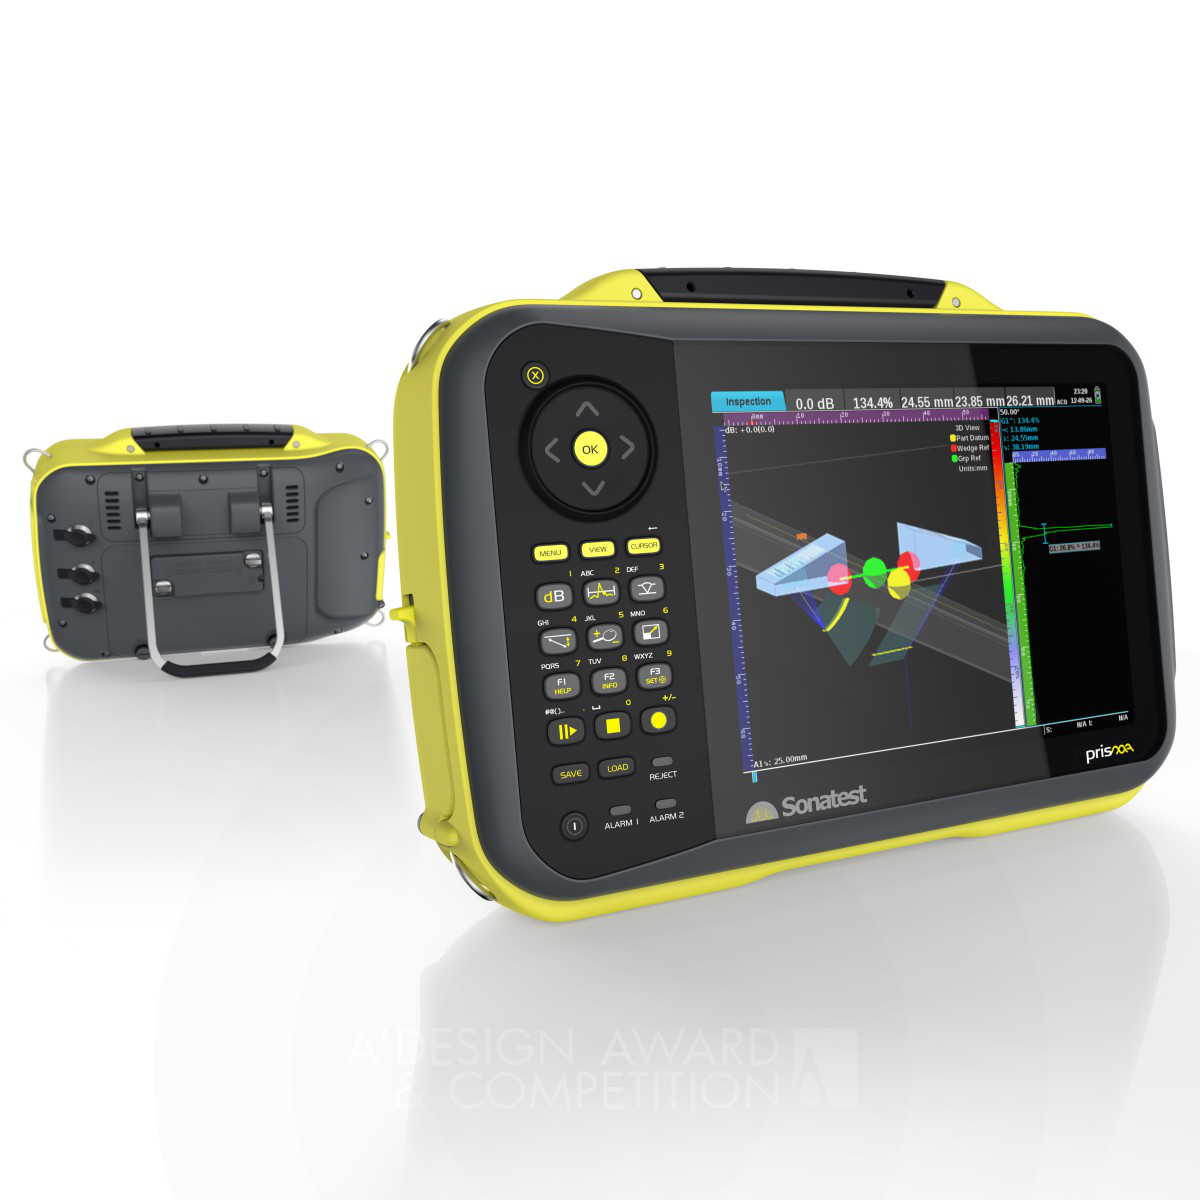 Prisma Portable Ultrasonic Flaw Detector by LA Design  Platinum Scientific Instruments and Research Equipment Design Award Winner 2013 